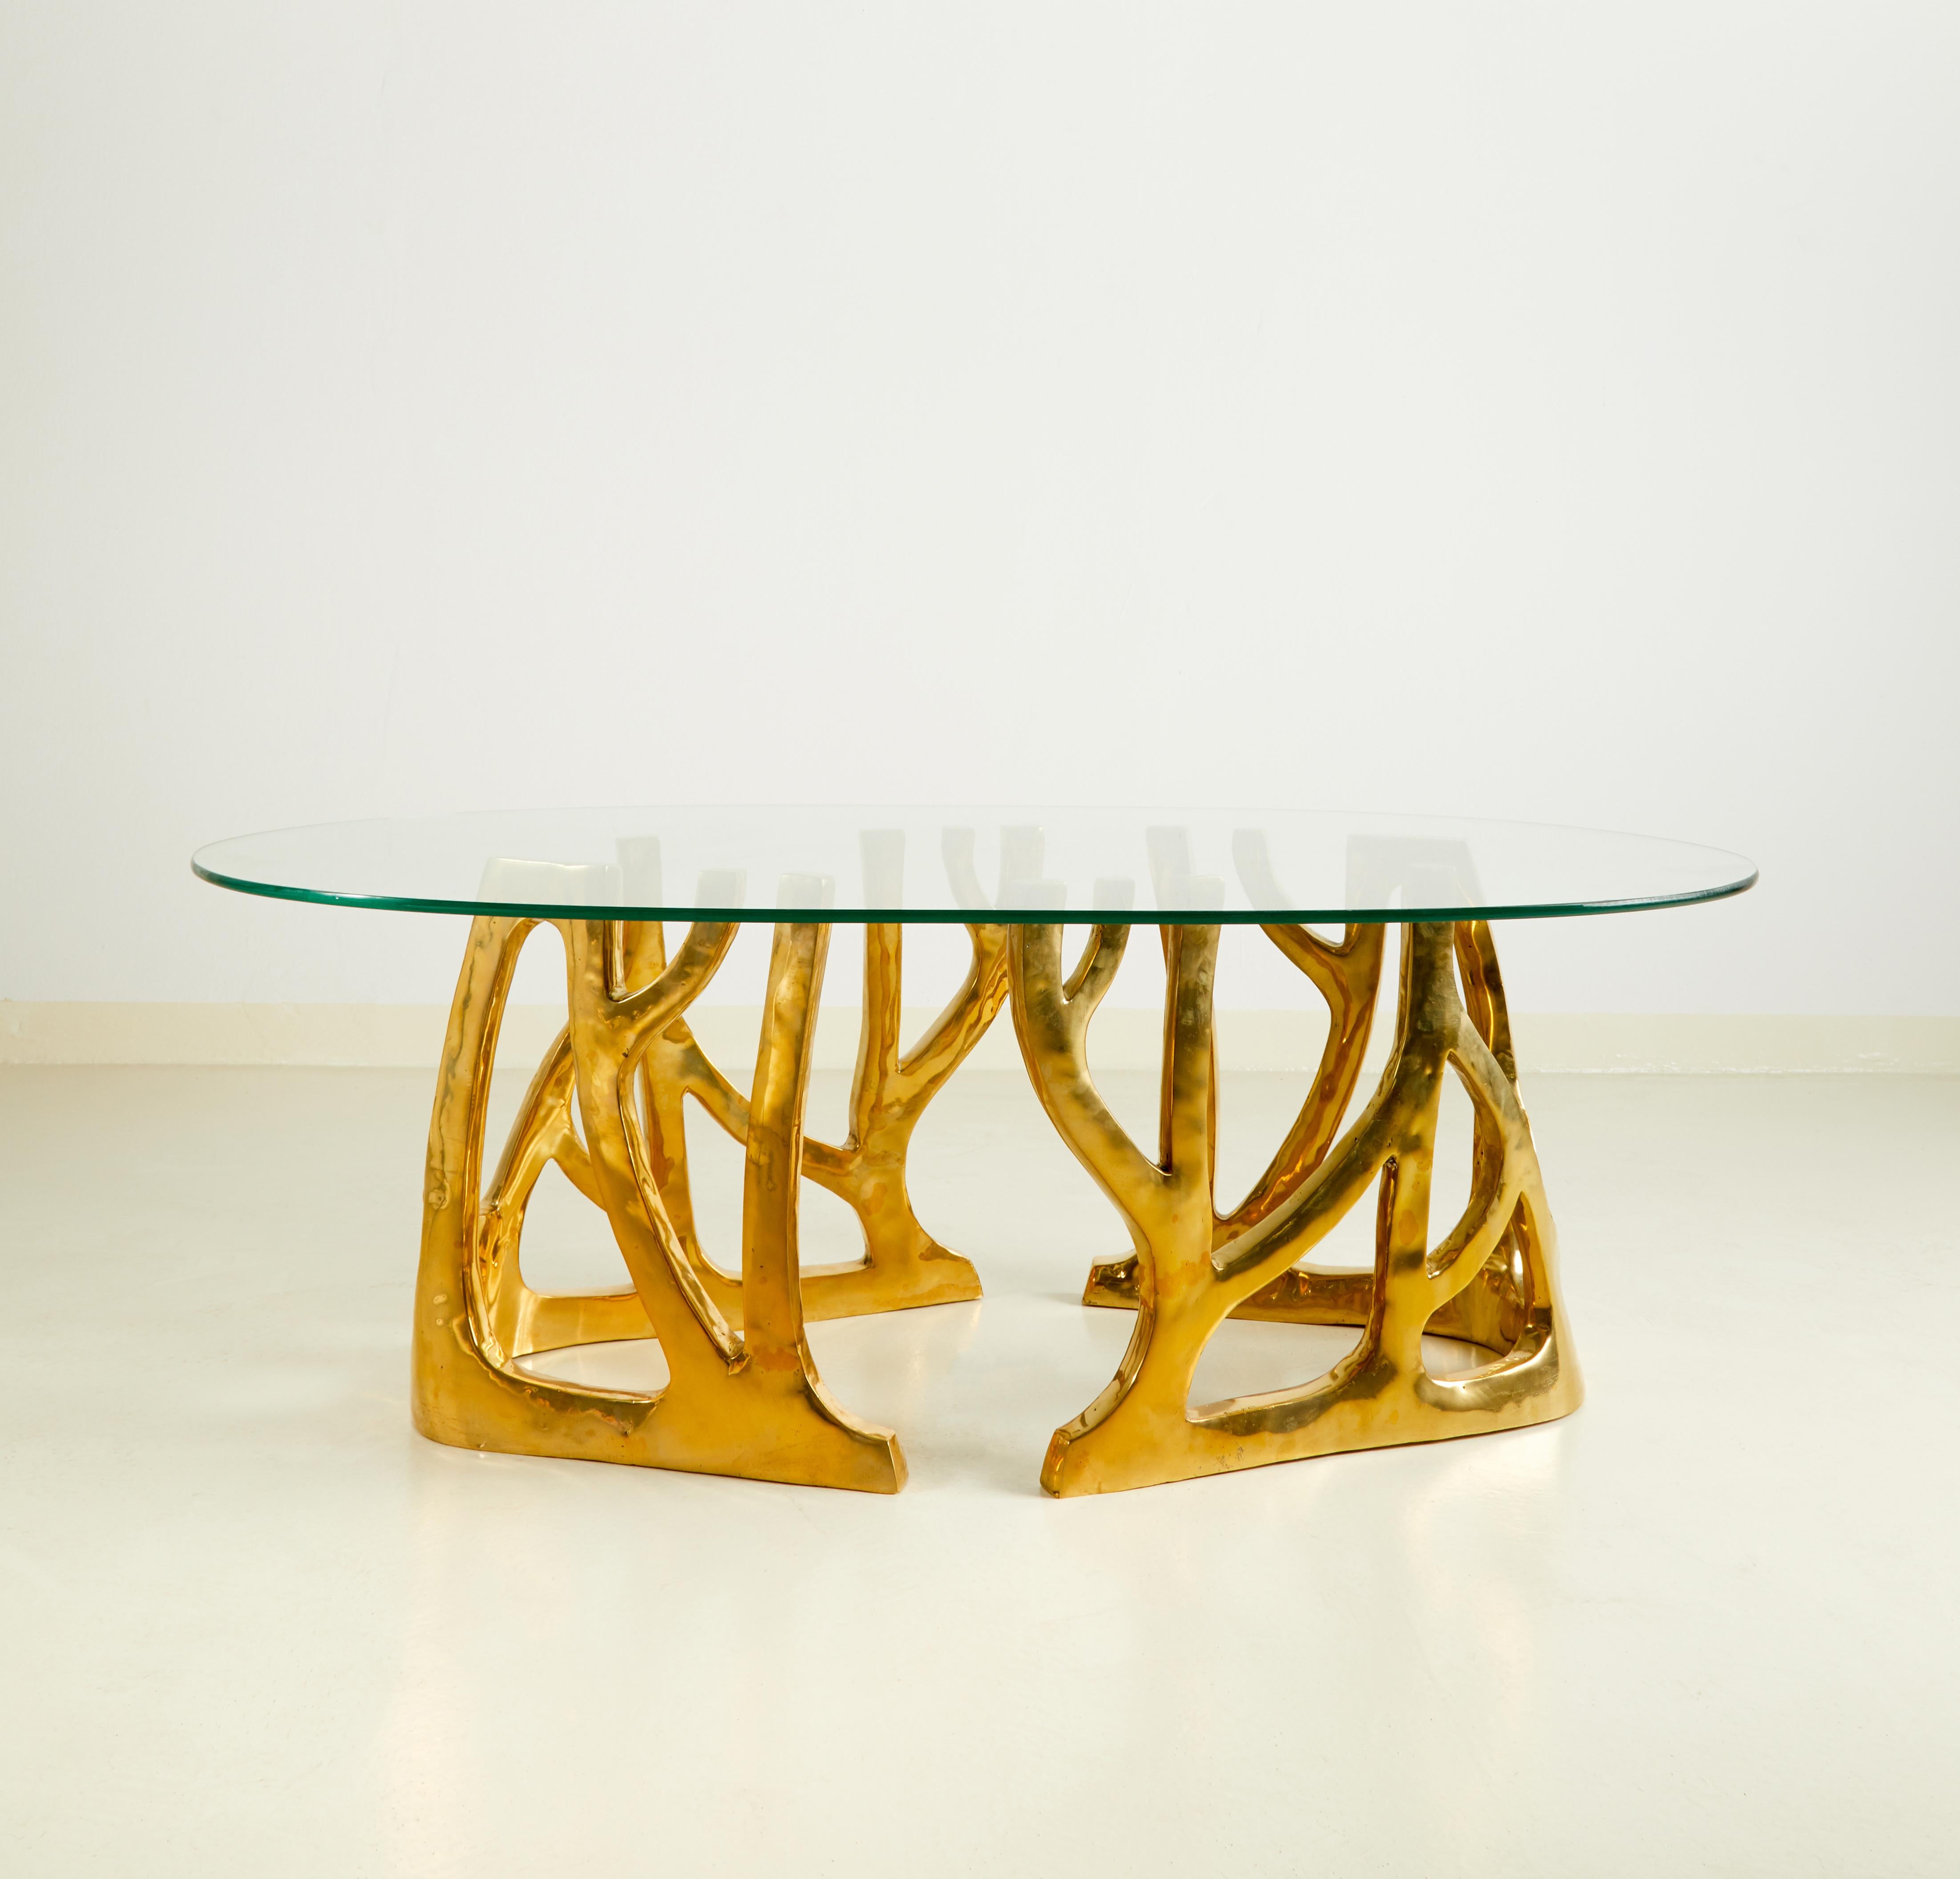 Brass coffee table - Galaxy - Misaya by Misaya
Dimensions: W 48 x L 45 x H 43 cm
Hand-sculpted brass table.